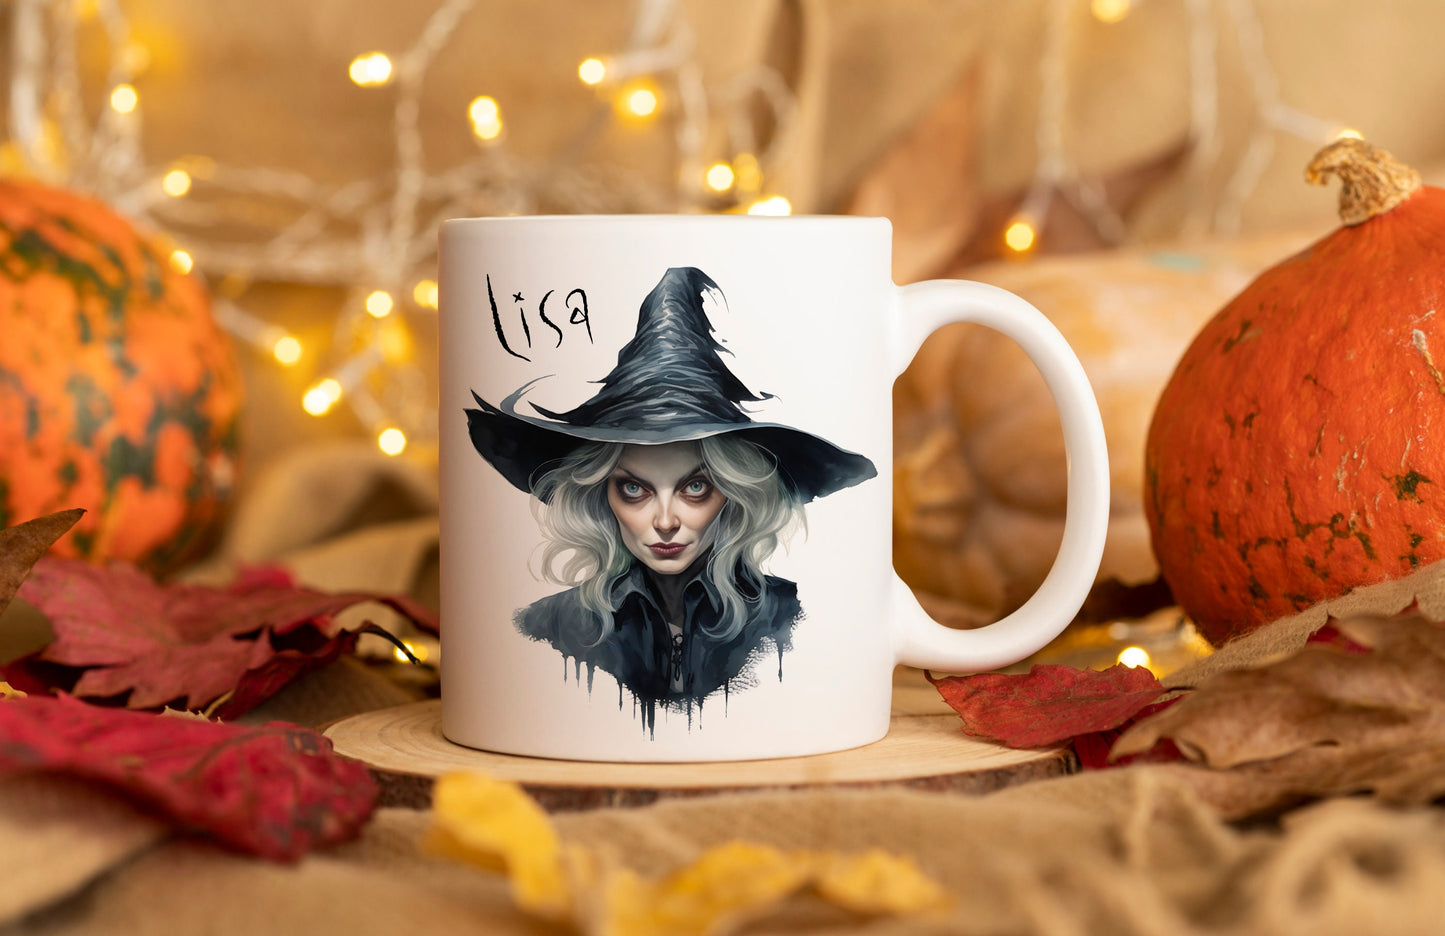 Personalised Vintage Halloween Mug, Halloween Mug, Autumn Mug, Personalised Halloween Mug, Vintage Halloween Grim Reaper Mug